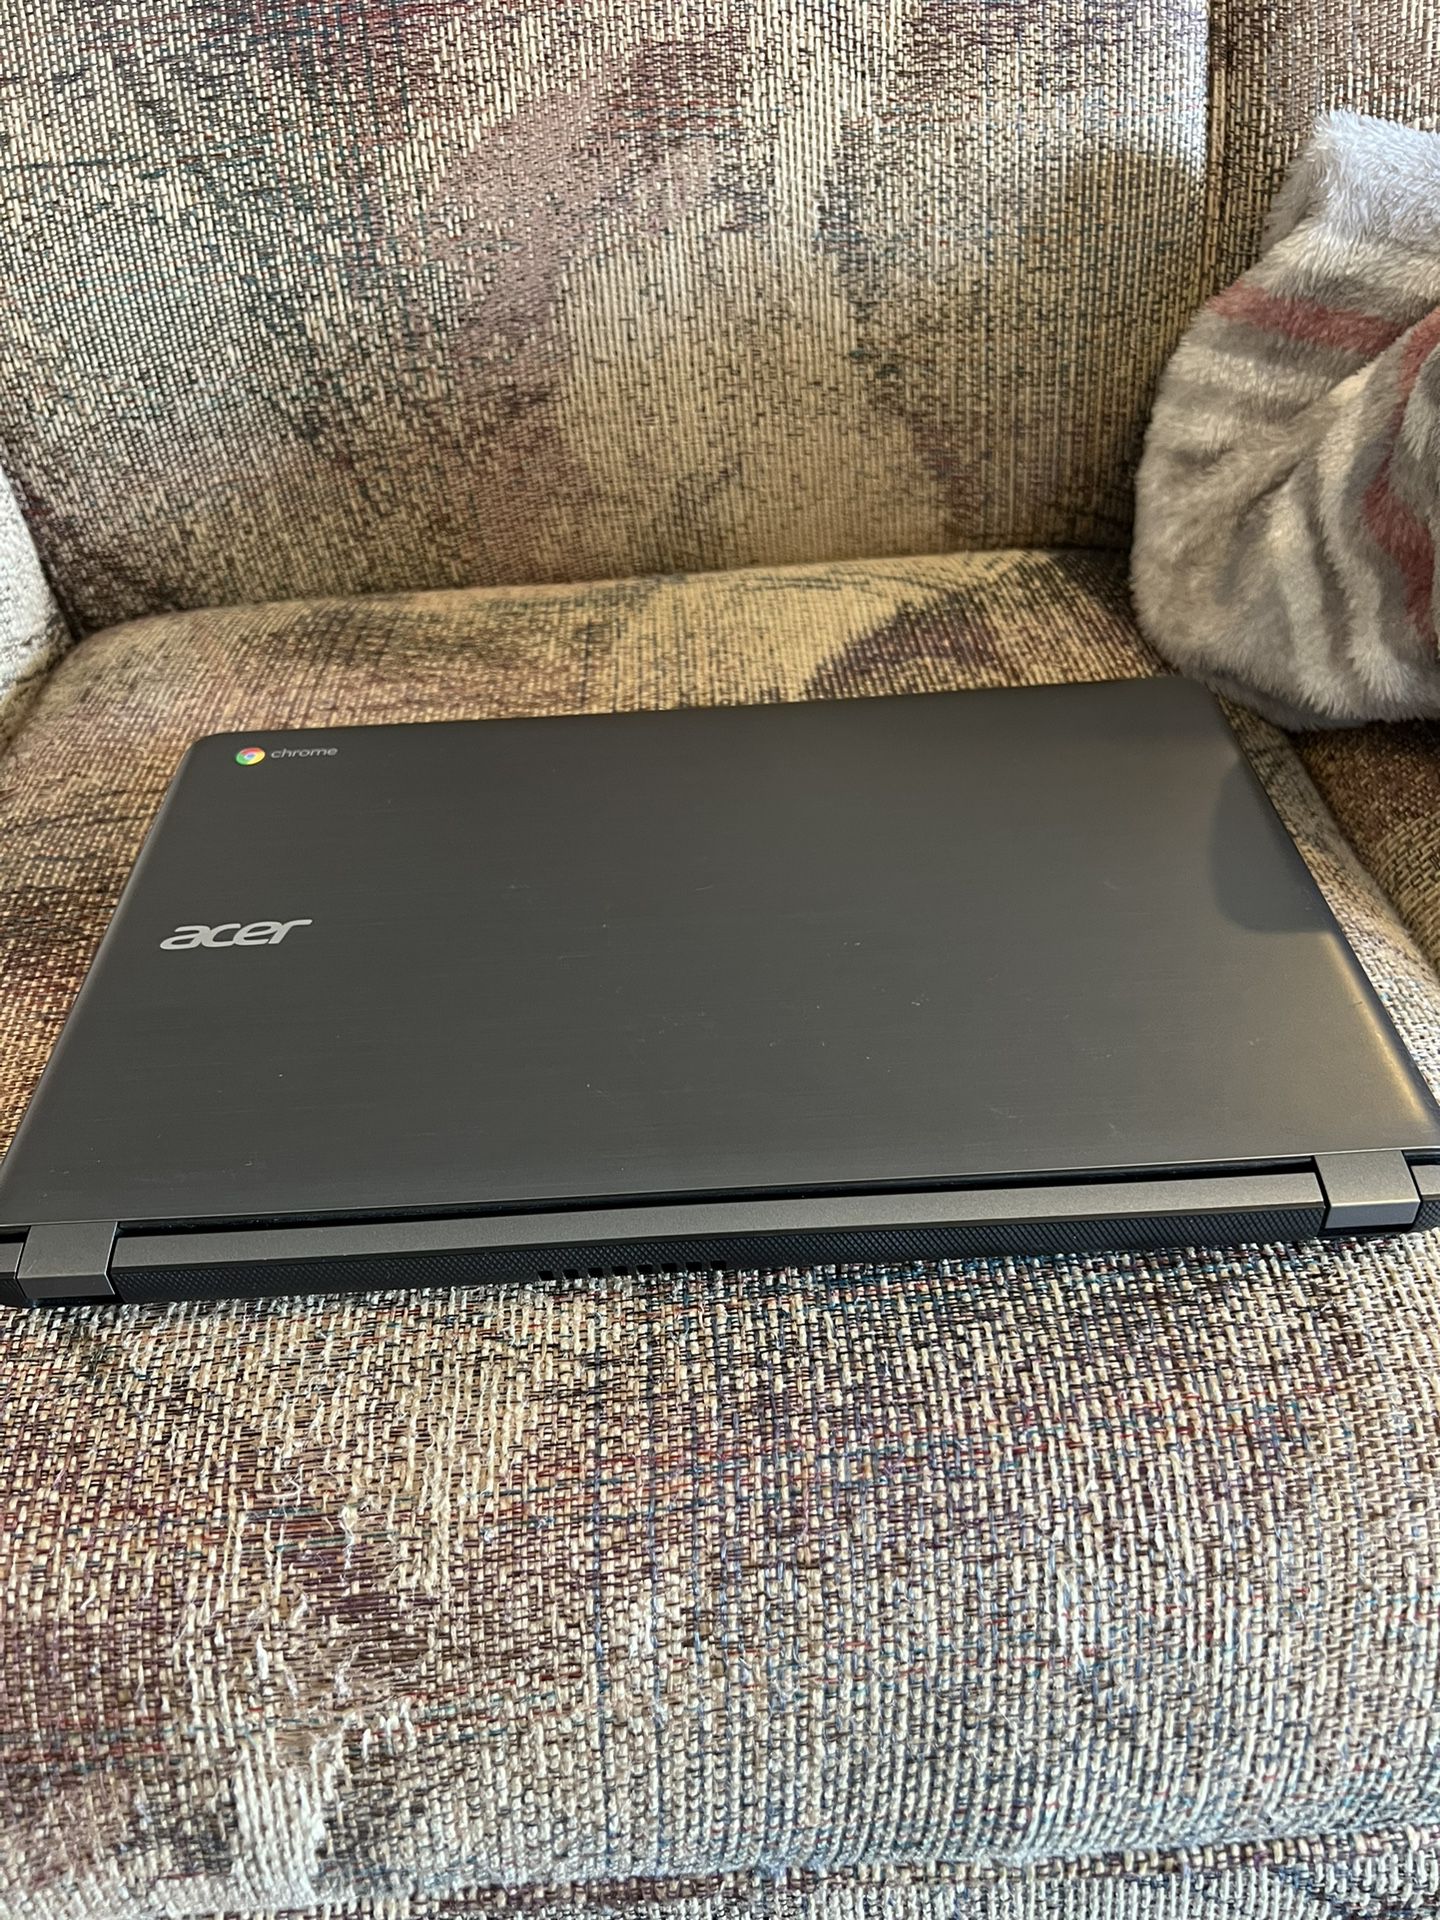 Acer Chromebook 15.6”, Granite Gray, Intel Atom